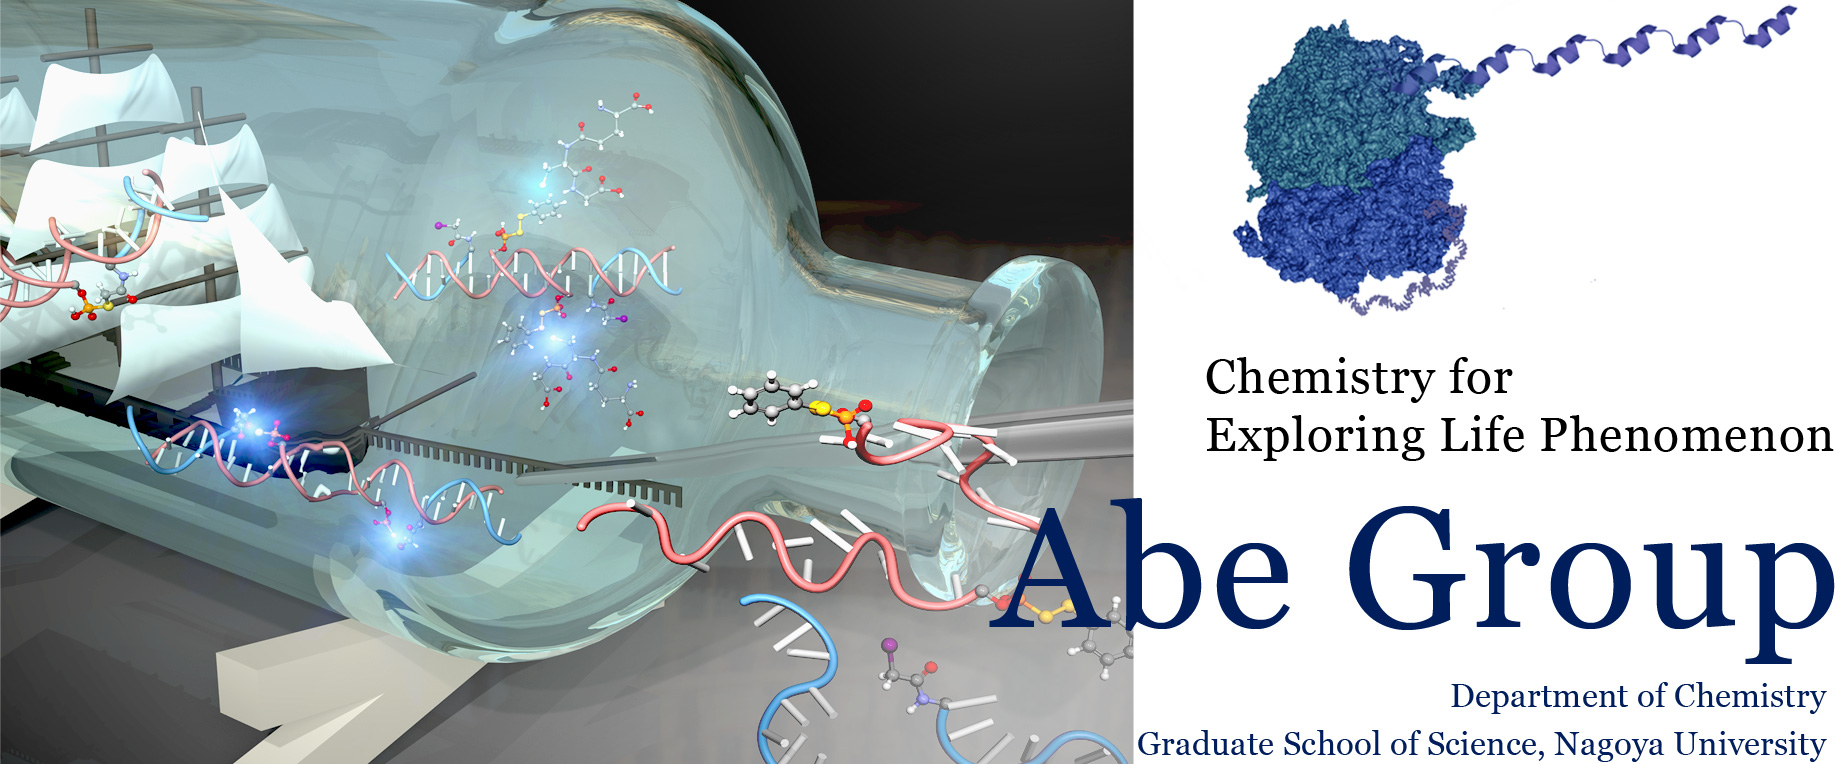 Chemistry for Exploring Life Phenomenon, Abe Group, Department of Chemistry, Graduate School of Science, Nagoya University